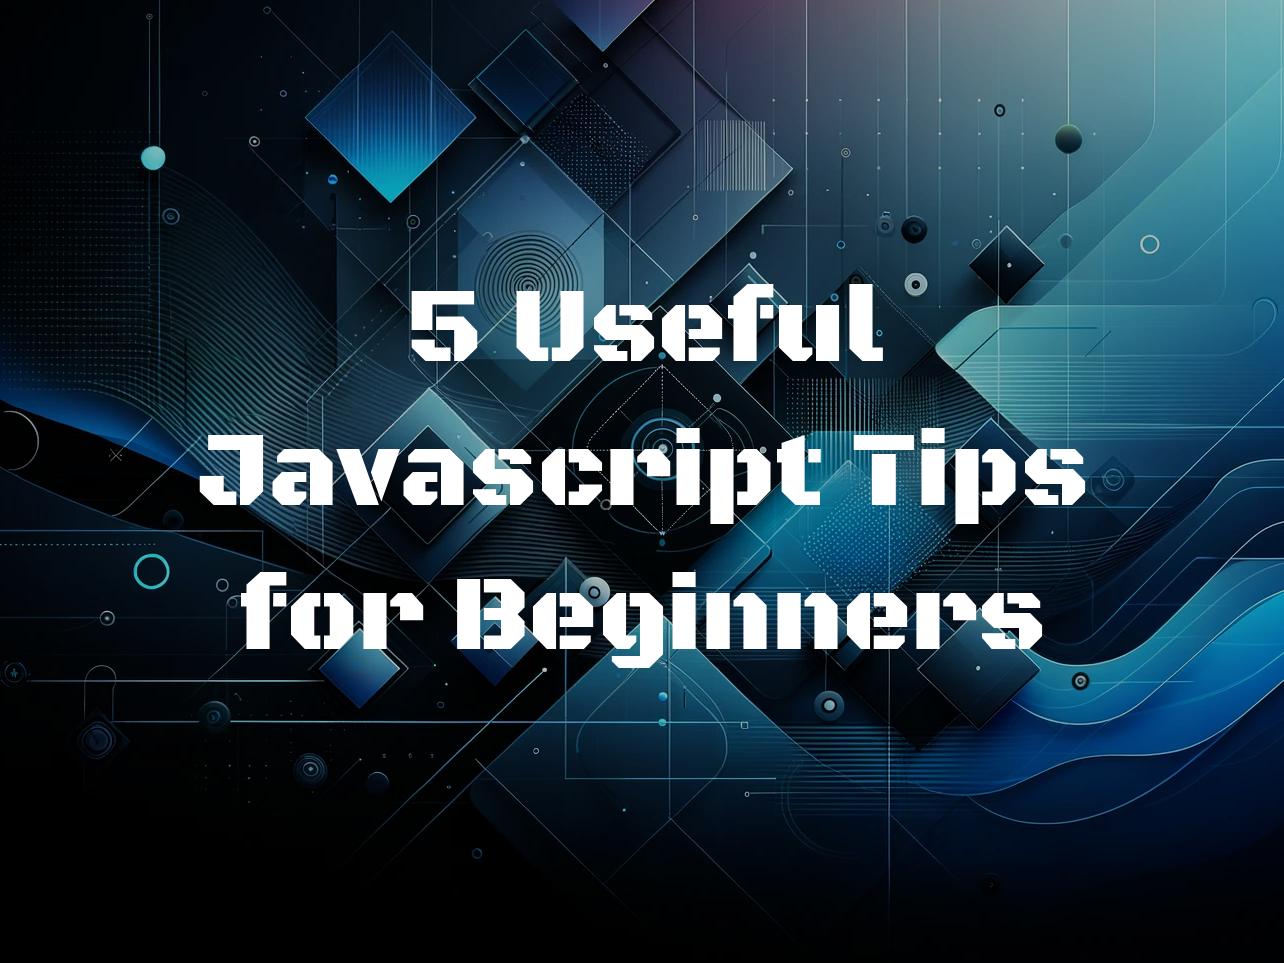 5 Useful Javascript Tips for Beginners